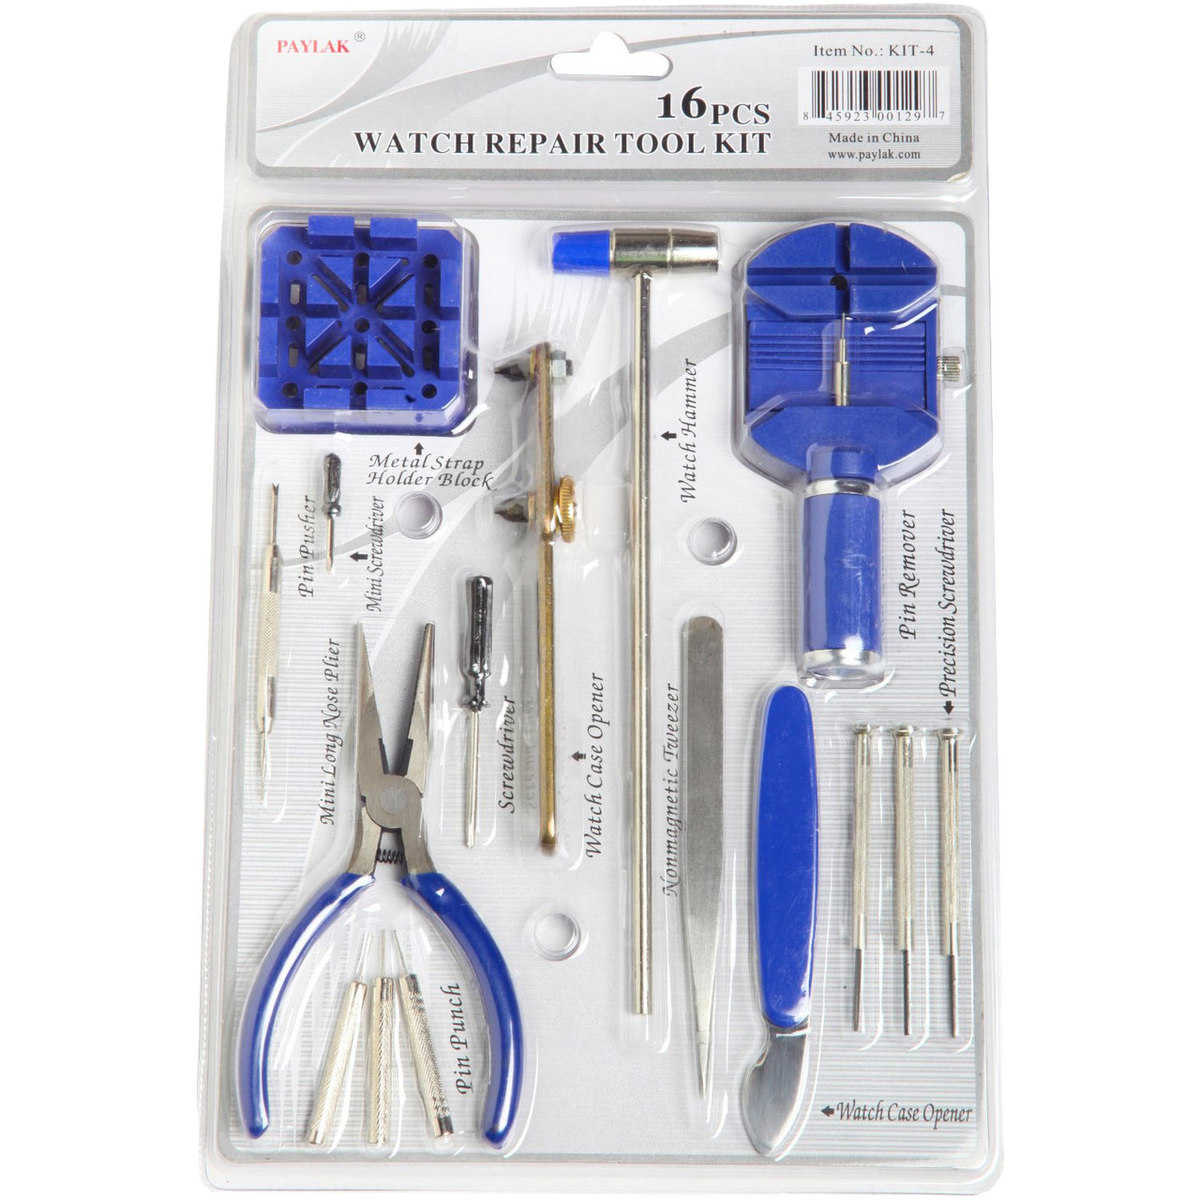 Watch Repair Tool Kit - 16 Pieces